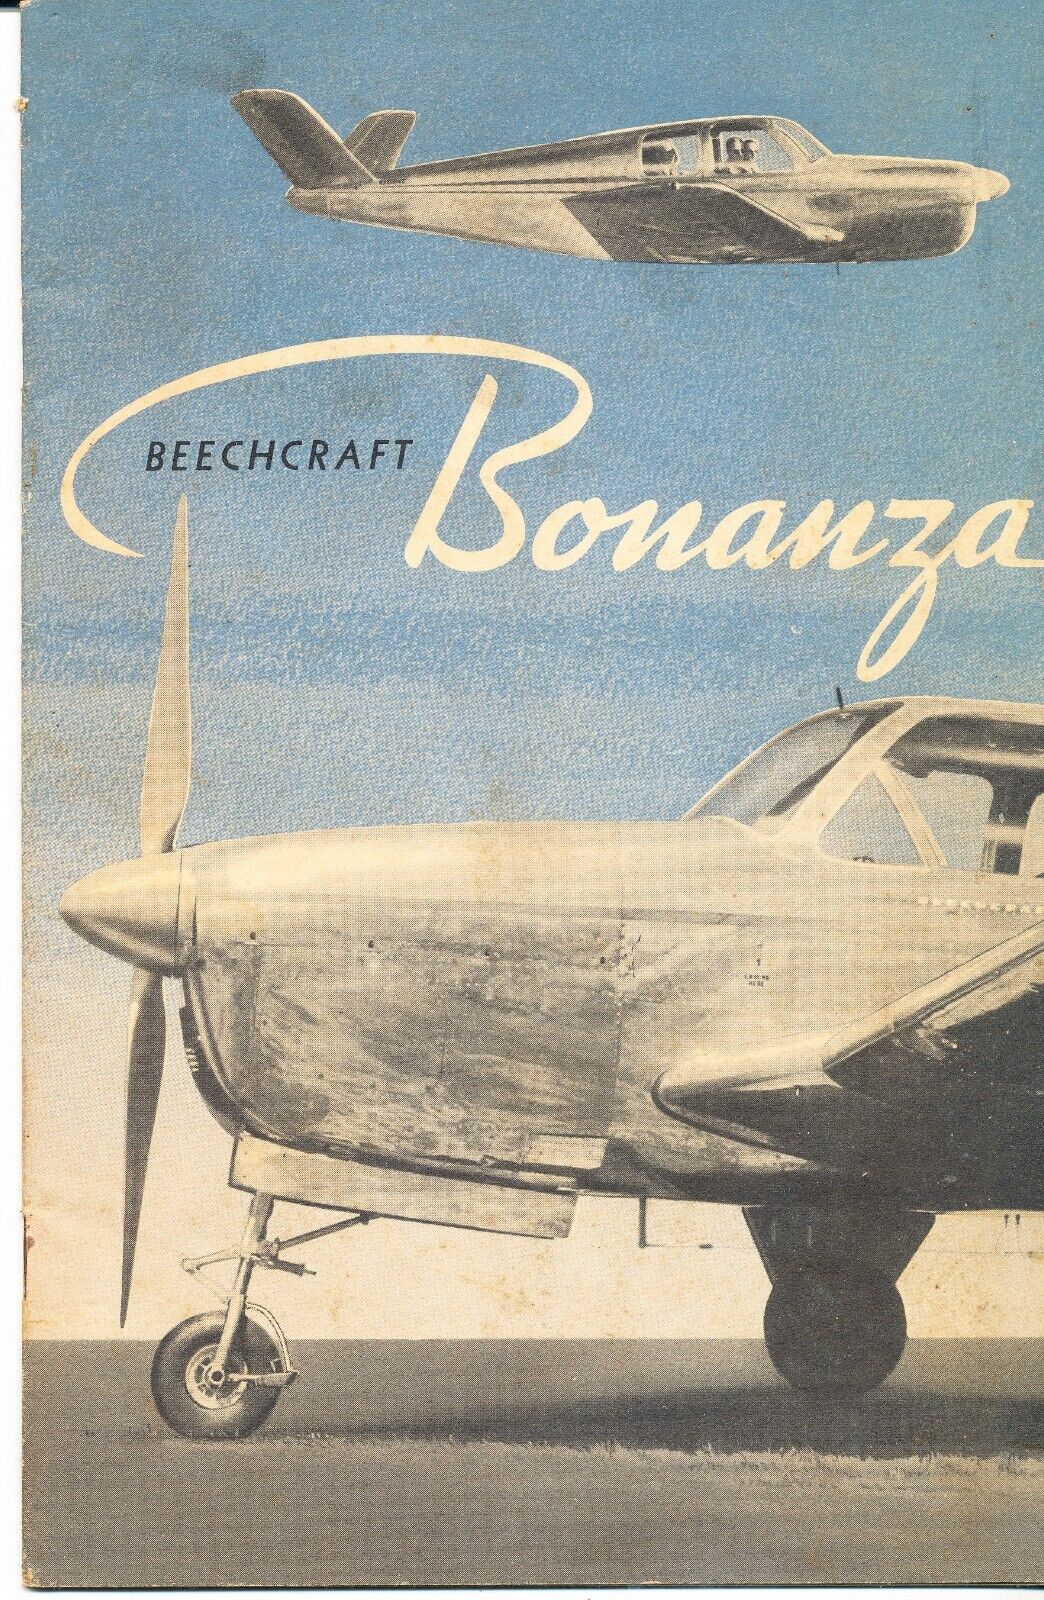 Early Beechcraft Bonanza sales brochure and paperwork circa 1947